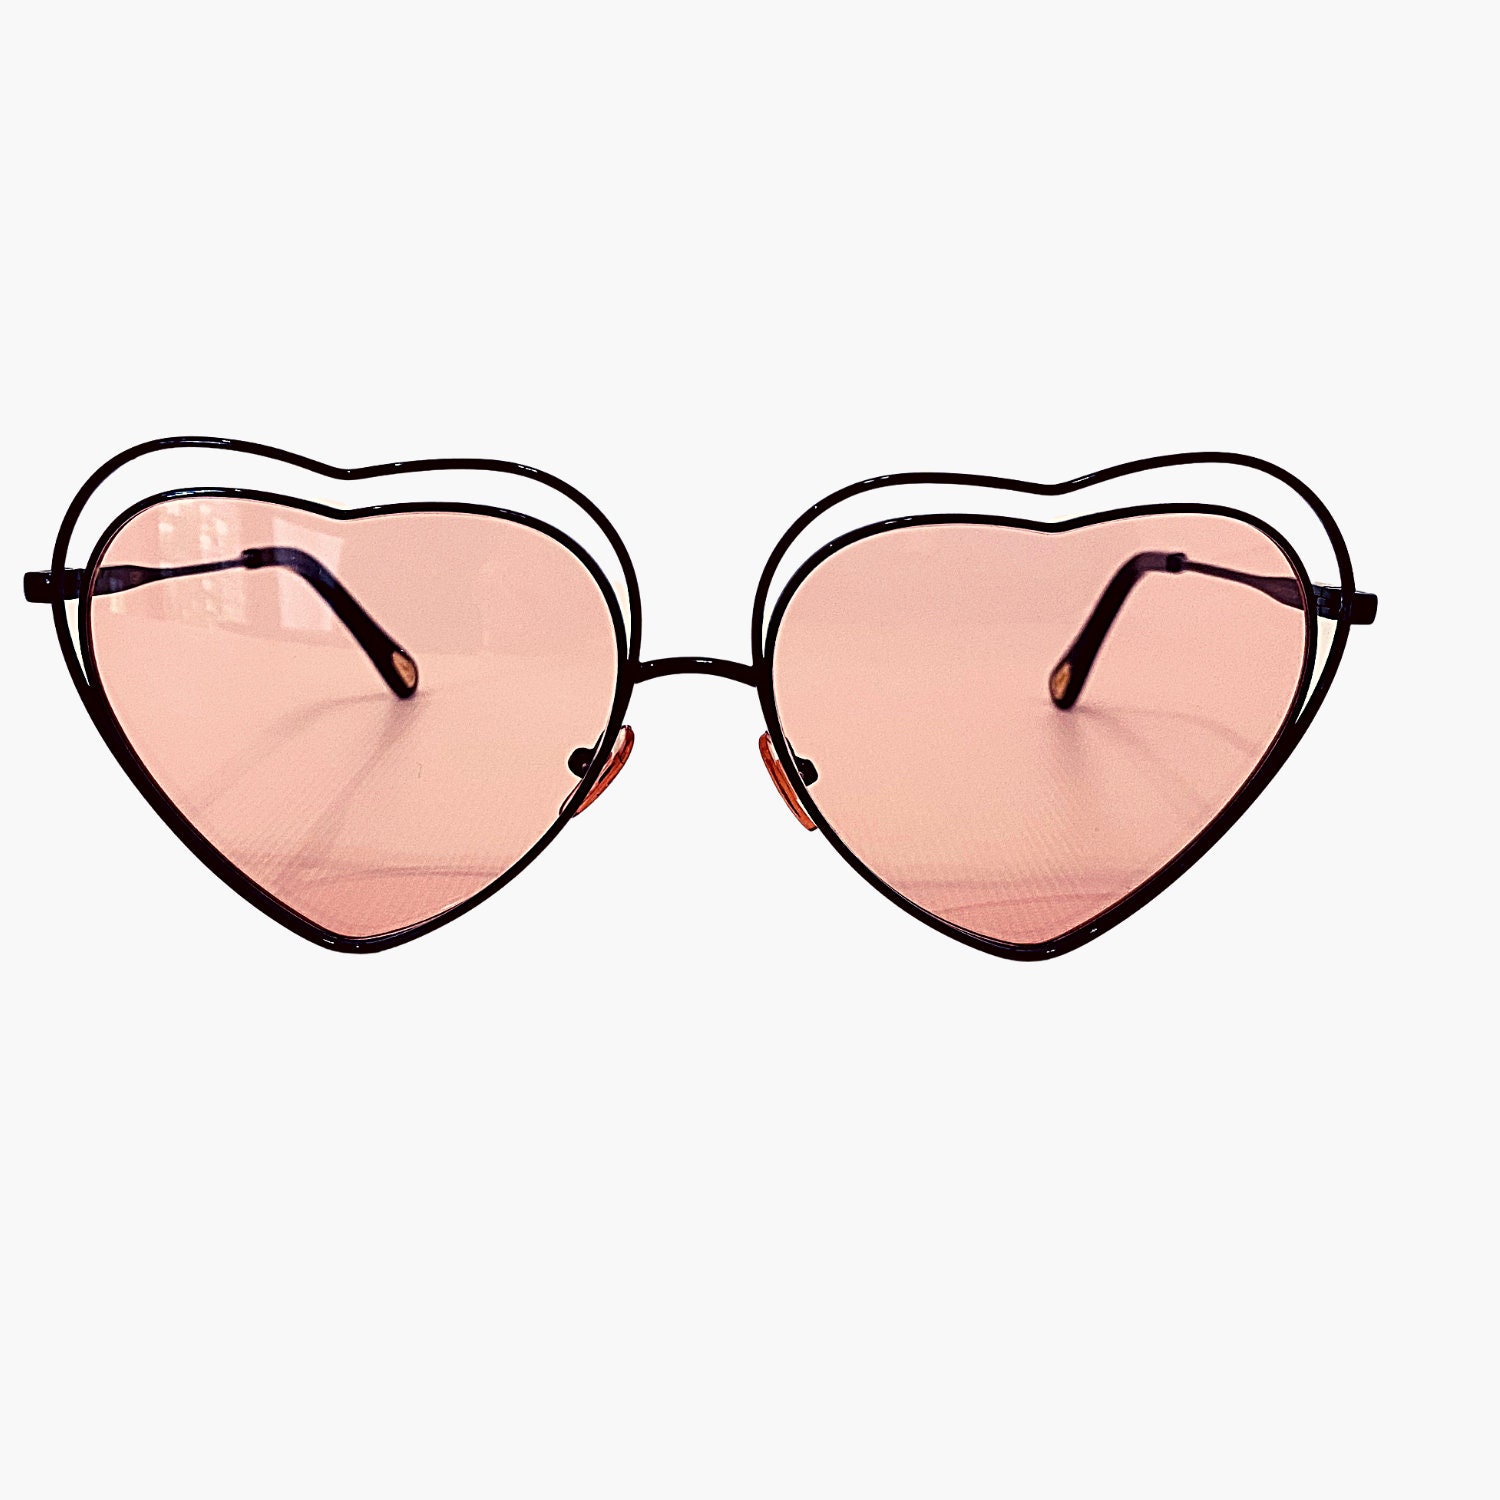 Vintage Look Heart Sunglasses Pastel Pink & Blue | Etsy